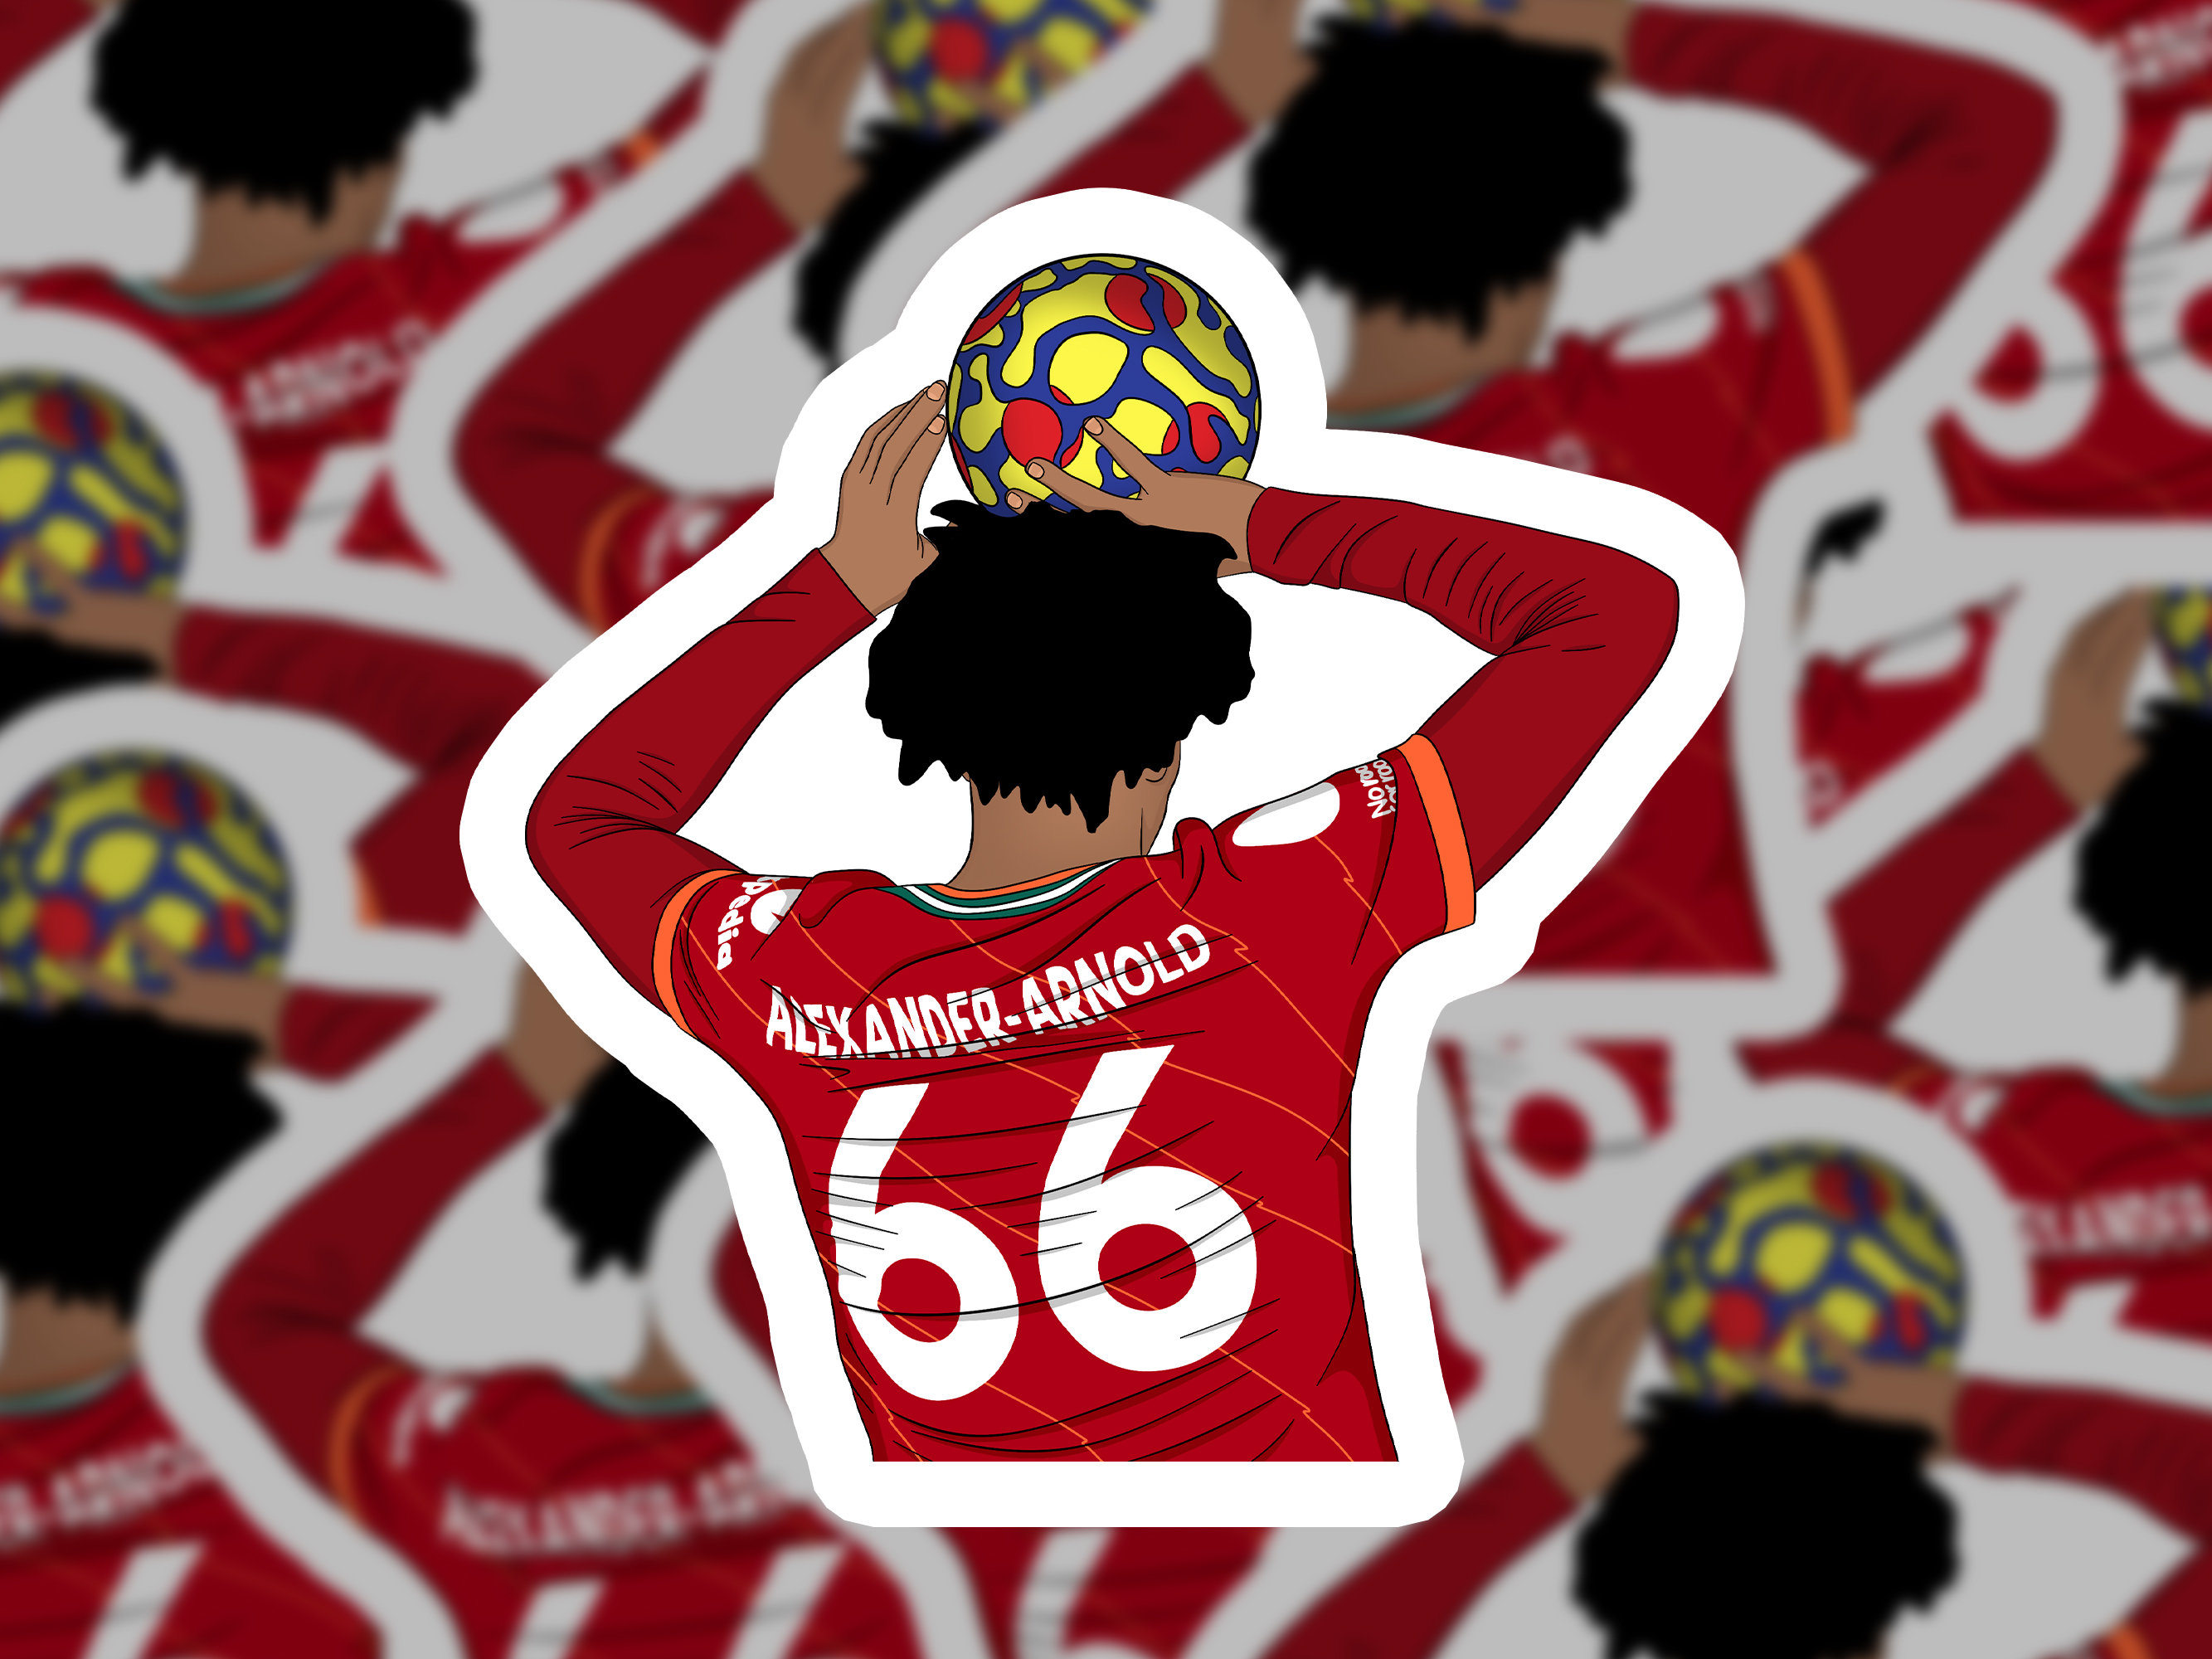 Thiago Alcantara Sticker by Football Twentyfour - Pixels